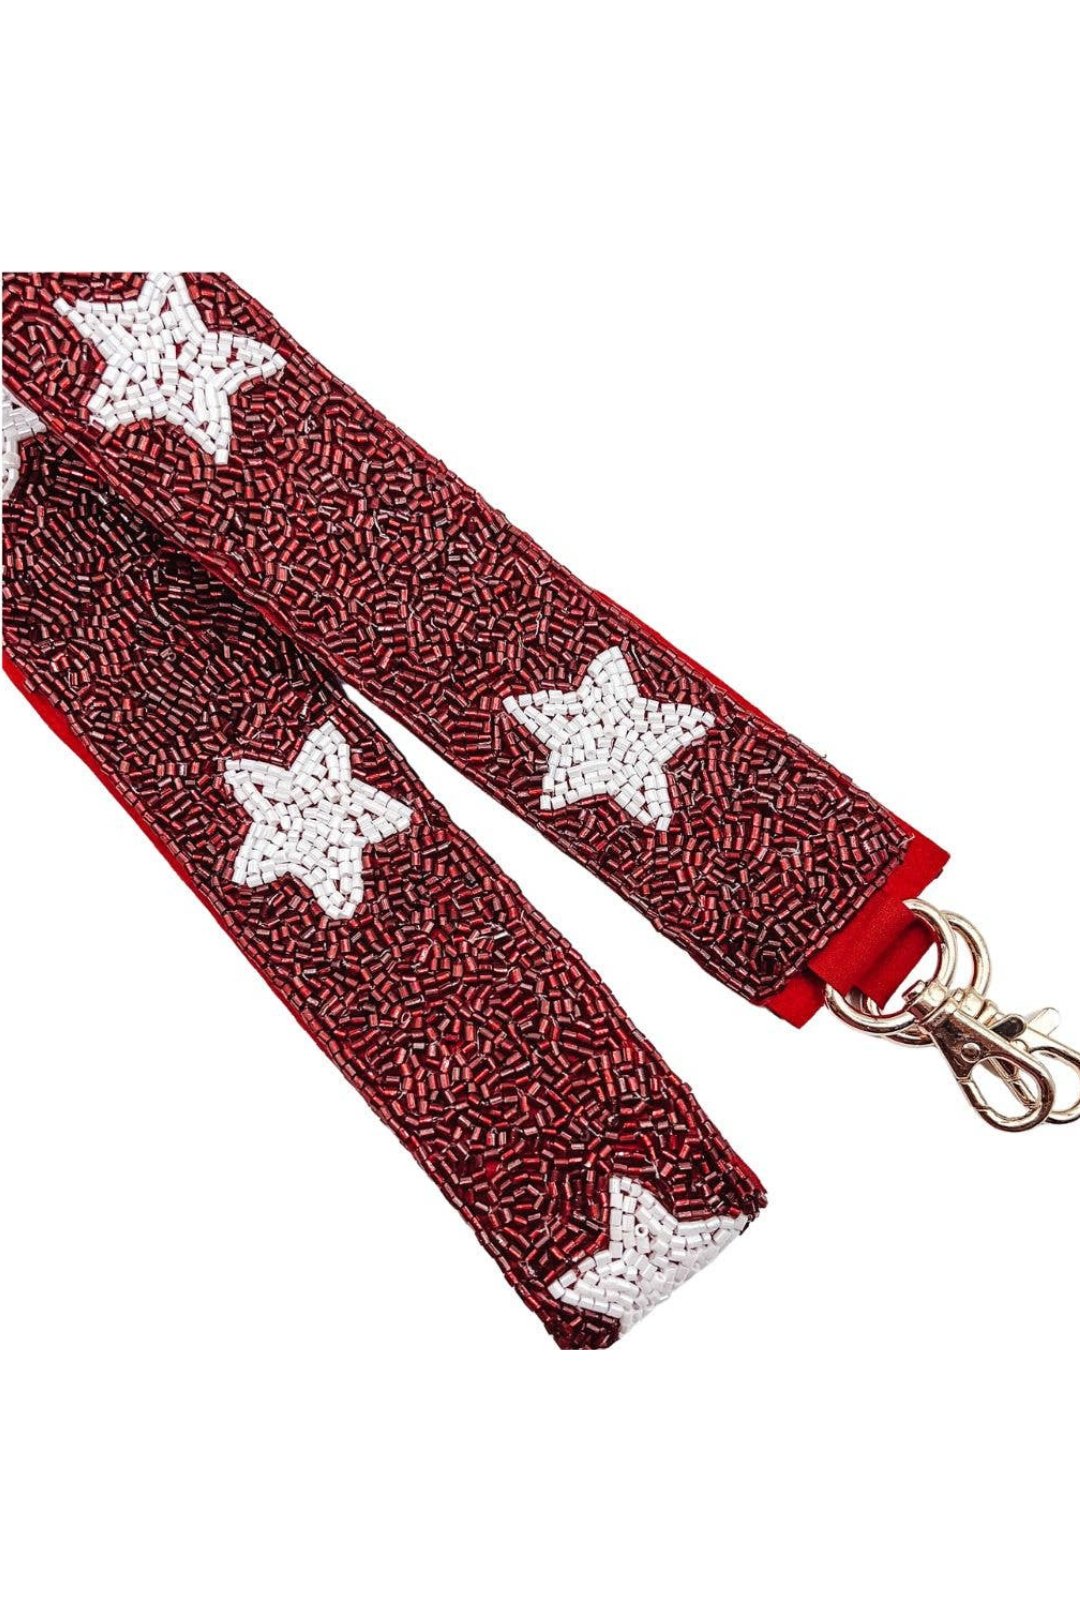 Maroon + White Star Beaded Bag Strap - Treasure Jewels Inc. - Color Game